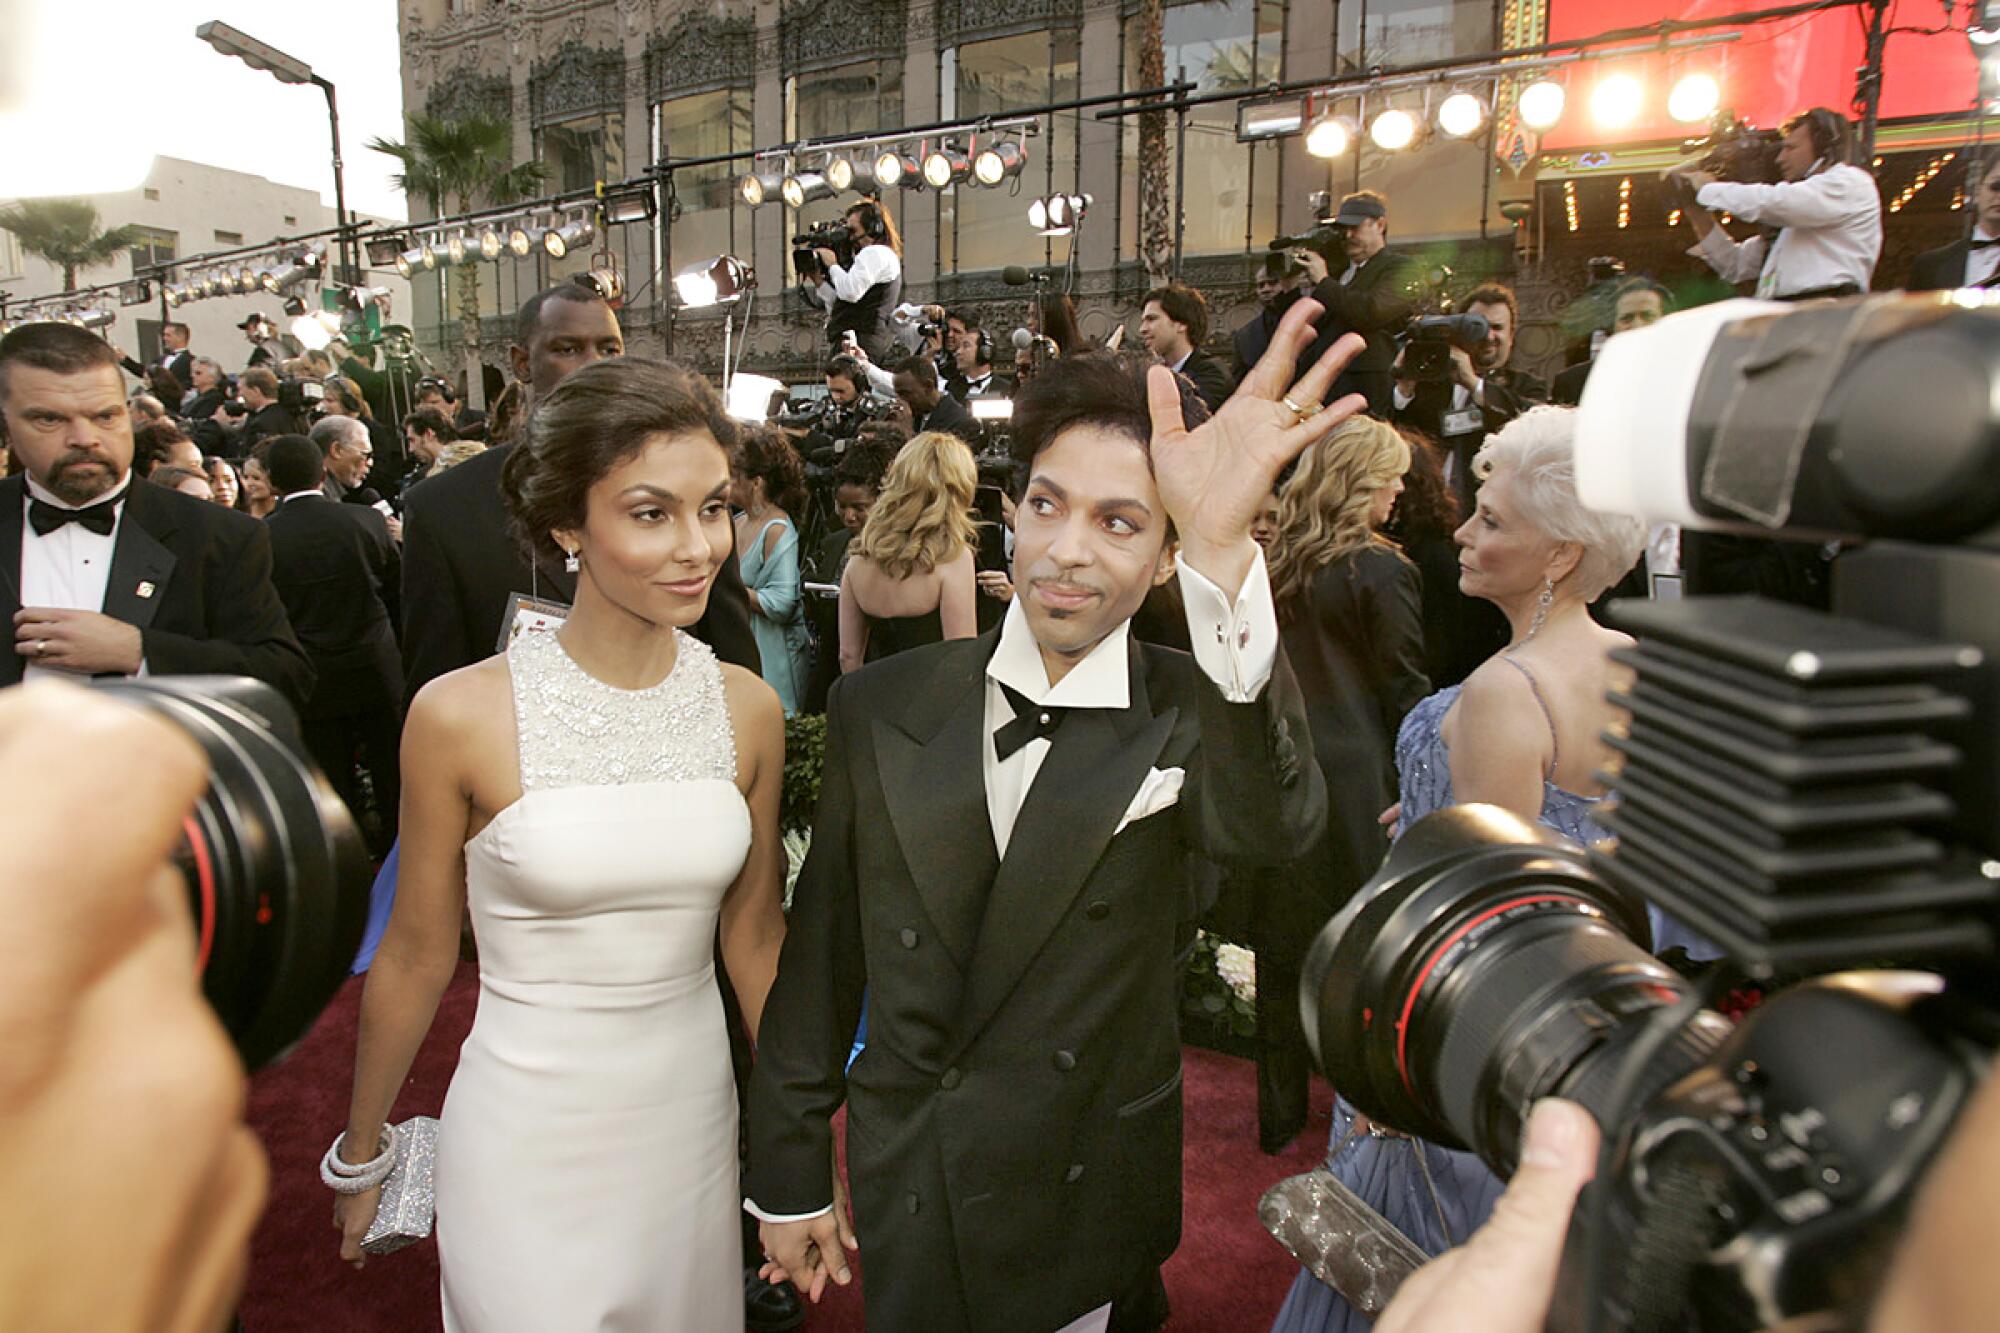 2005: Prince arrives at the Kodak Theatre with Manuela Testolini 